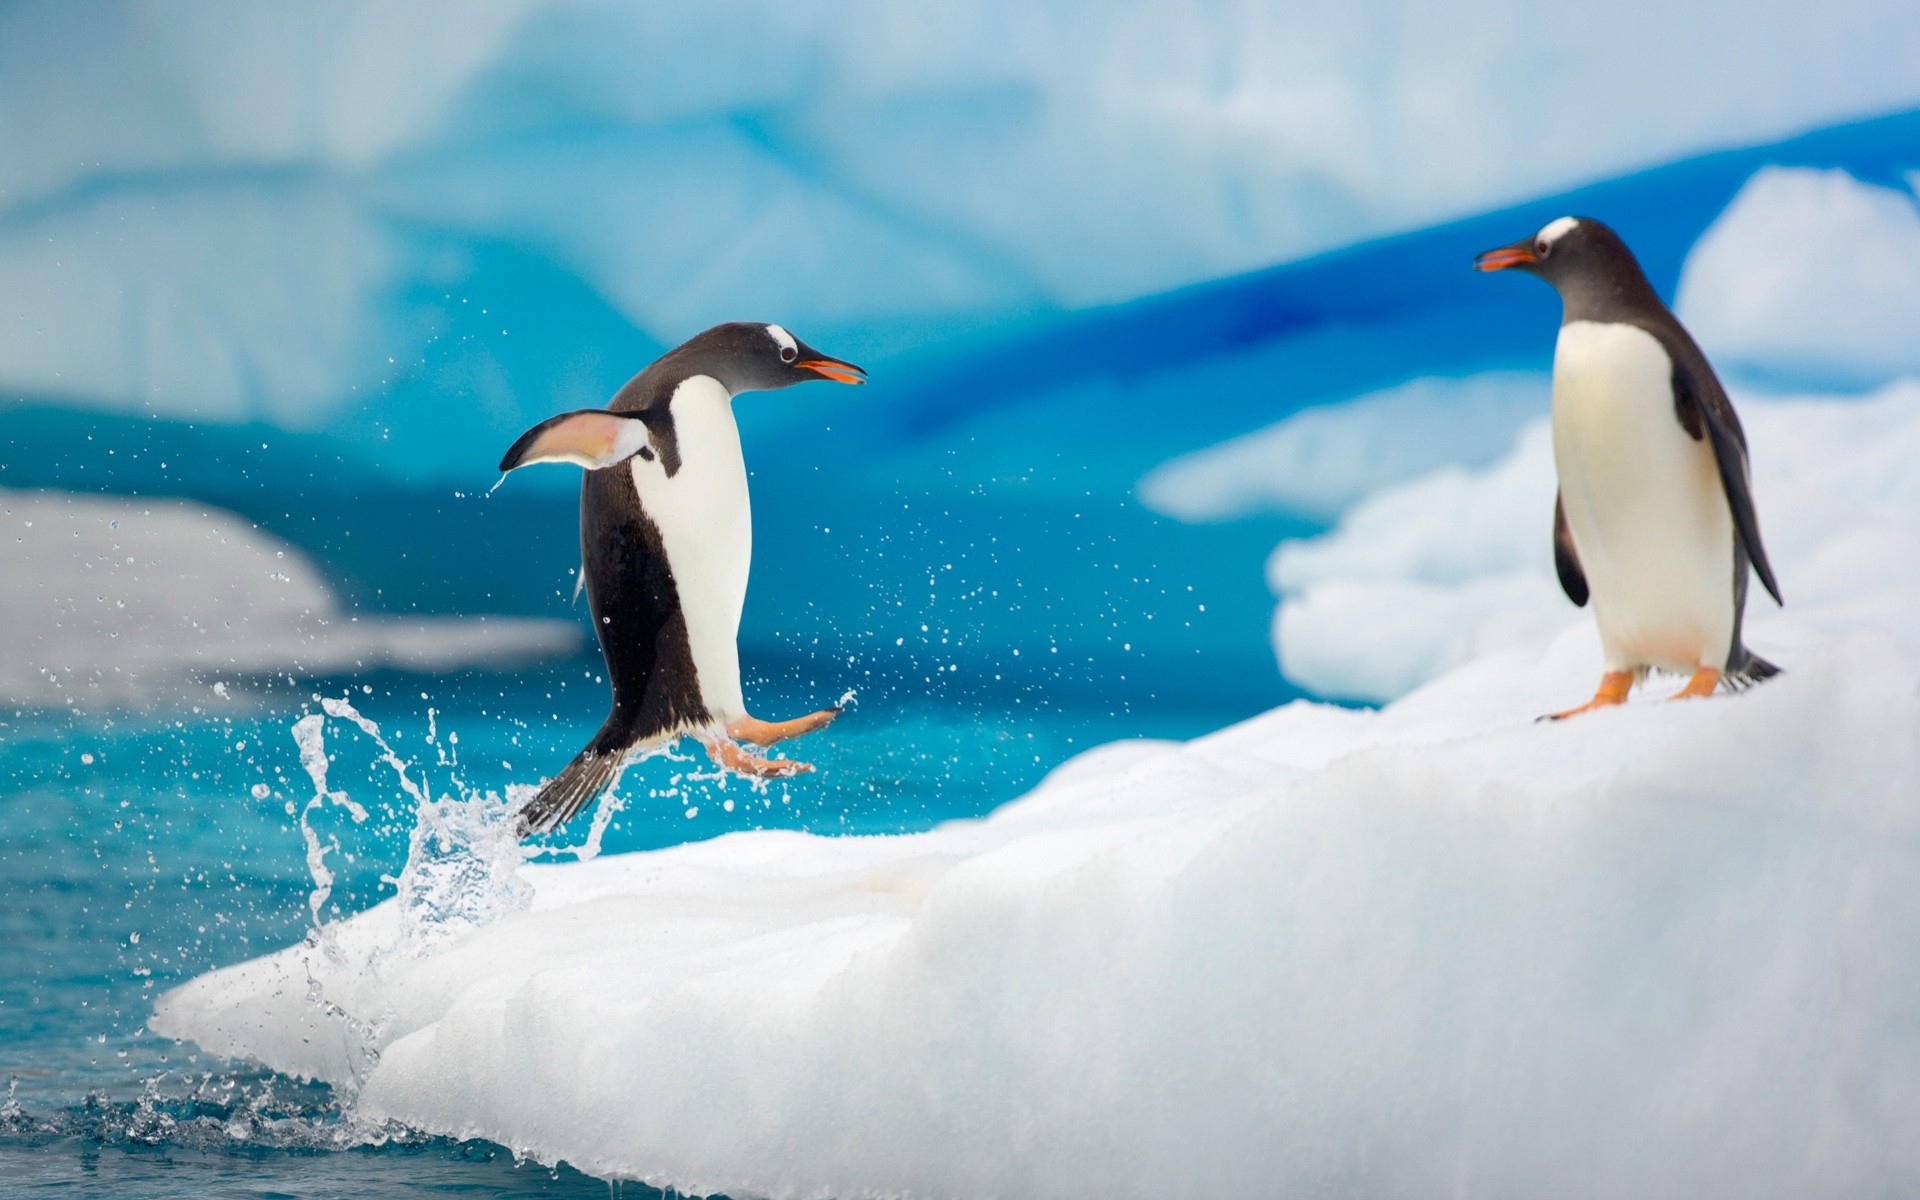 Картинки пингвины, пара, снег, лед, арктические, прыгать, Антарктида фото и обои на рабочий стол